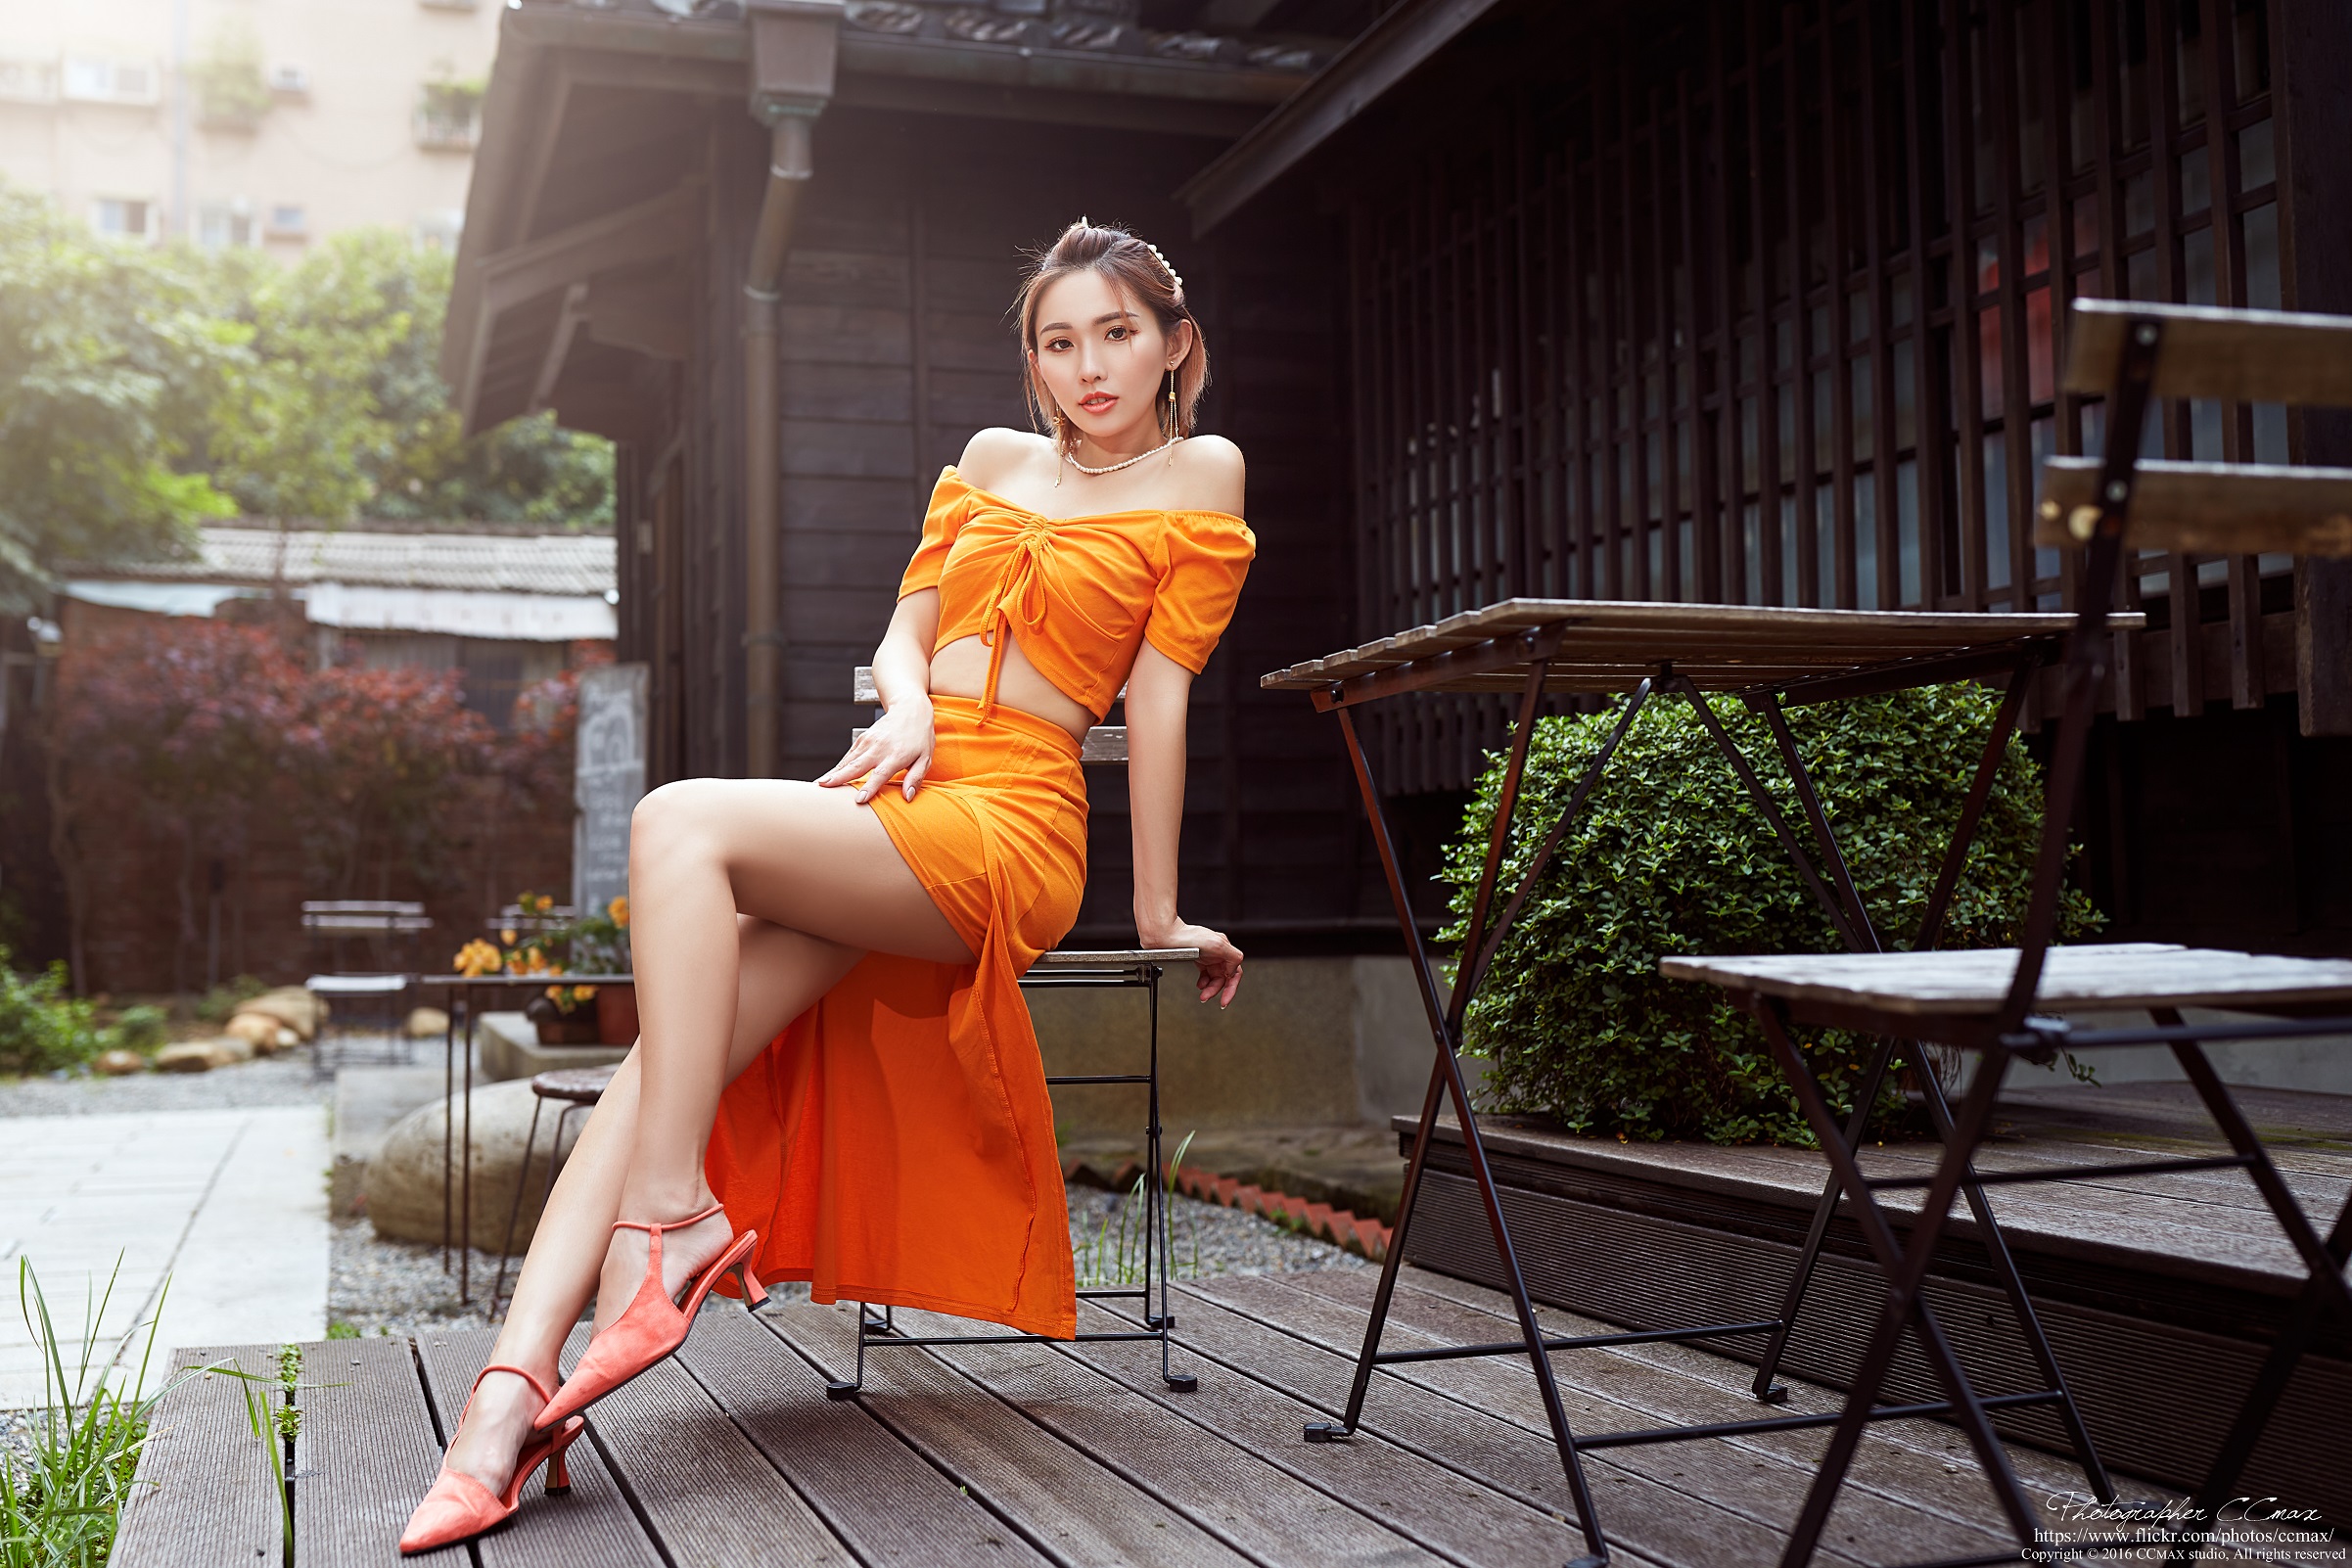 Max Chang Women Asian Orange Clothing Legs Terraces Orange Dress 2403x1602